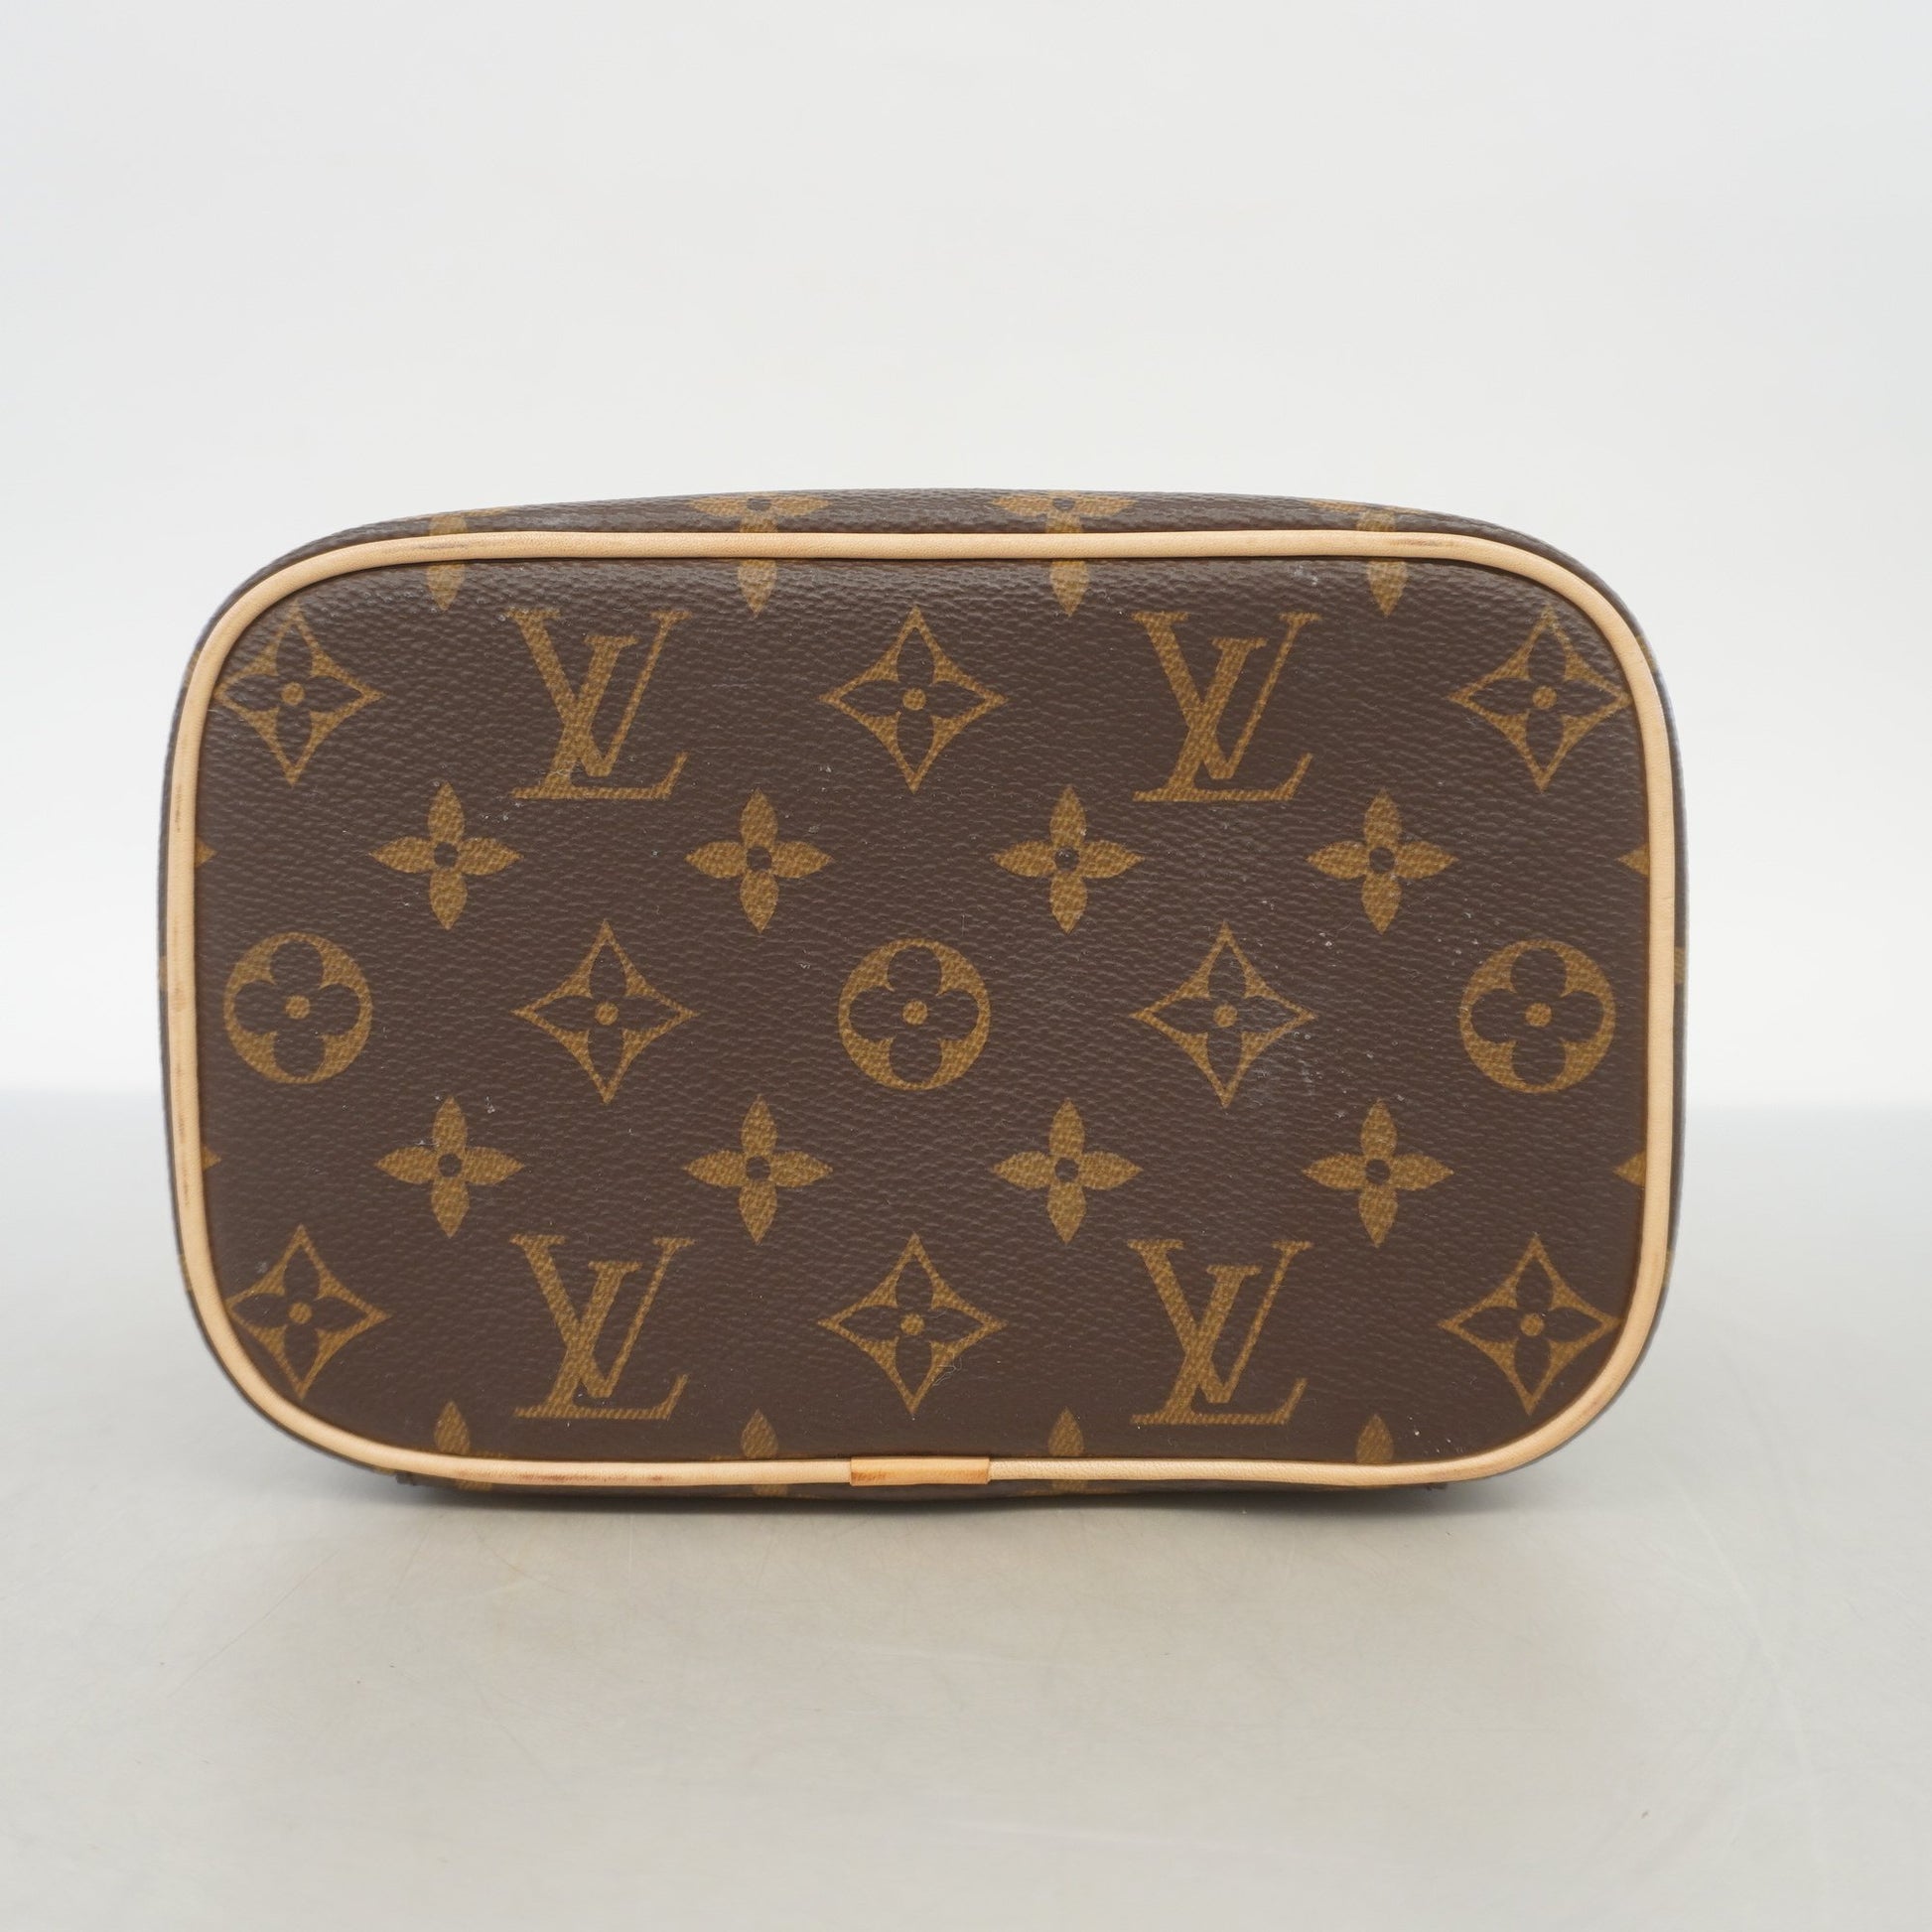 Shop Louis Vuitton MONOGRAM Nice mini toiletry pouch (M44495) by IledesPins